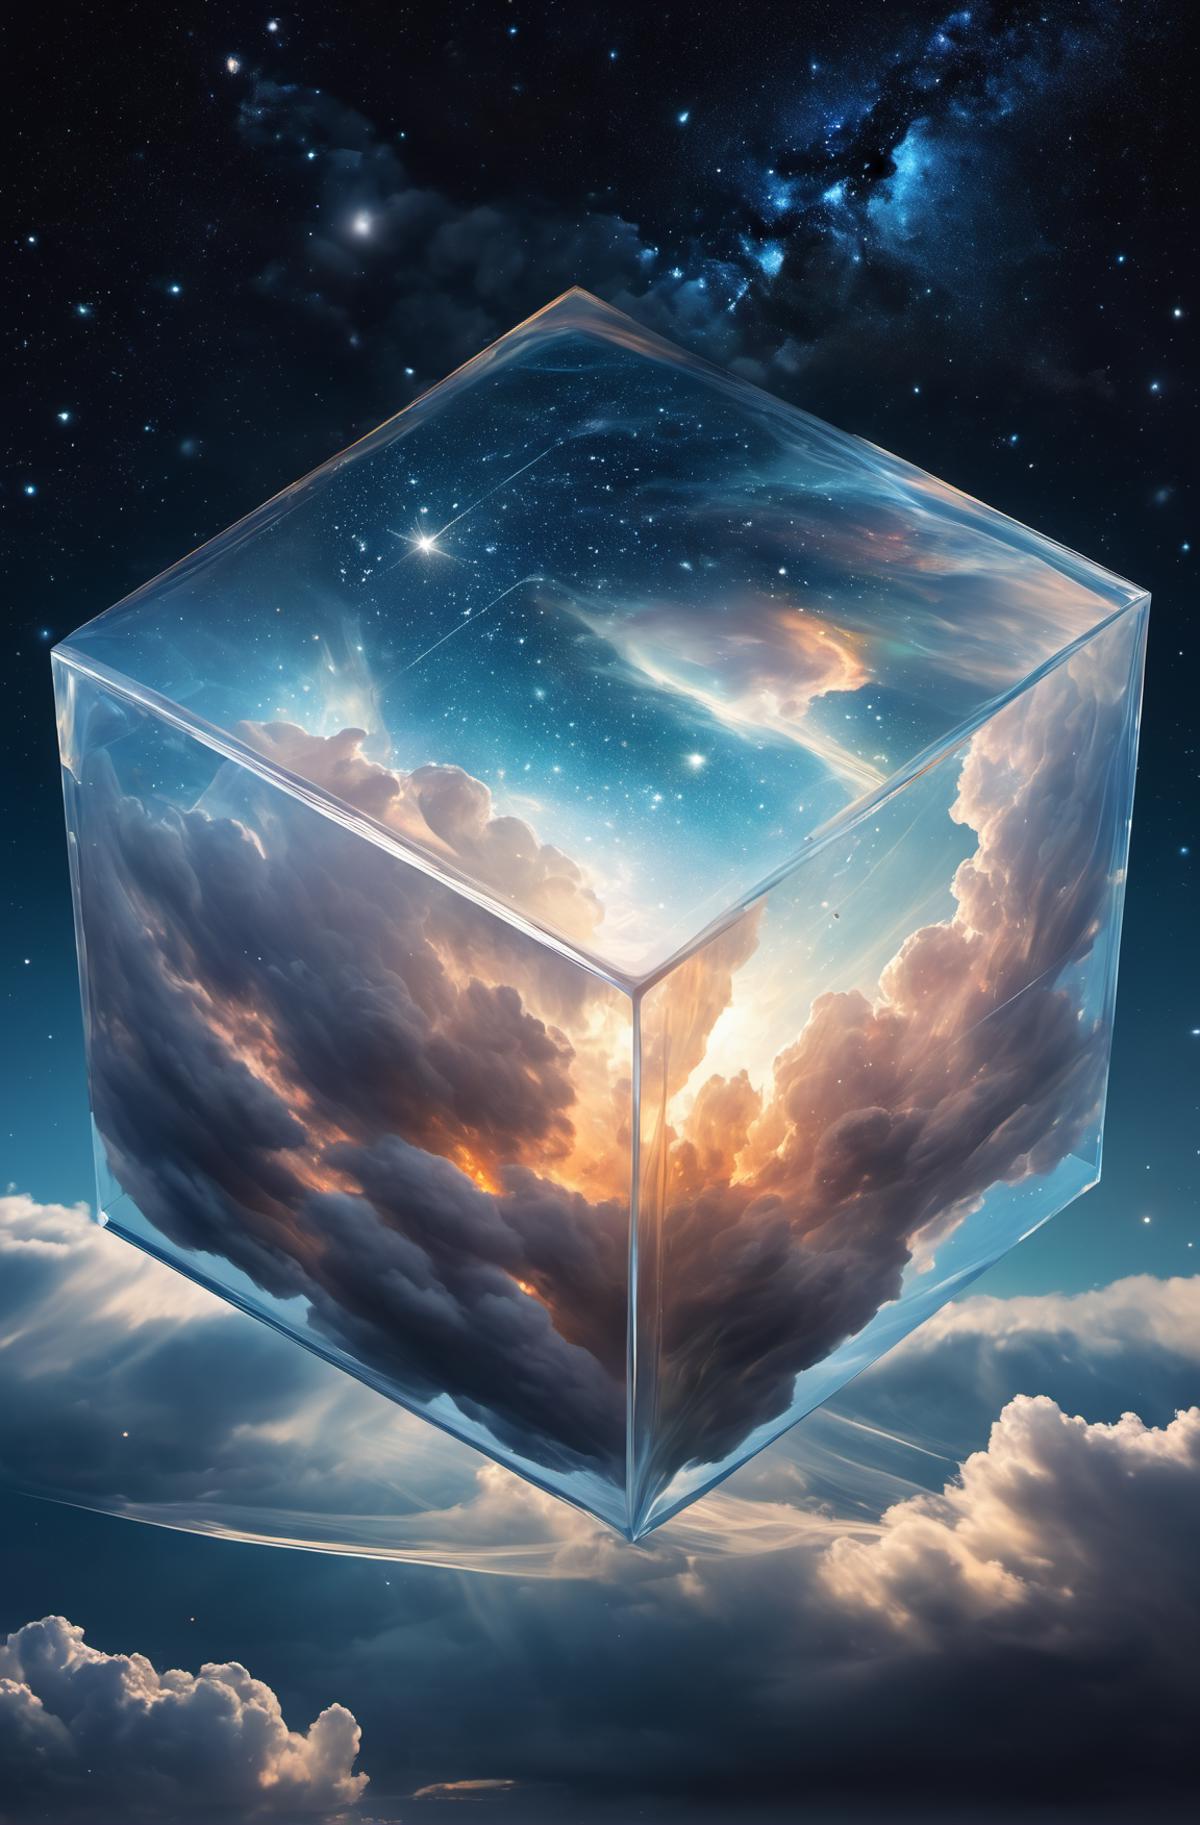 A cube with a cloudy sky inside.